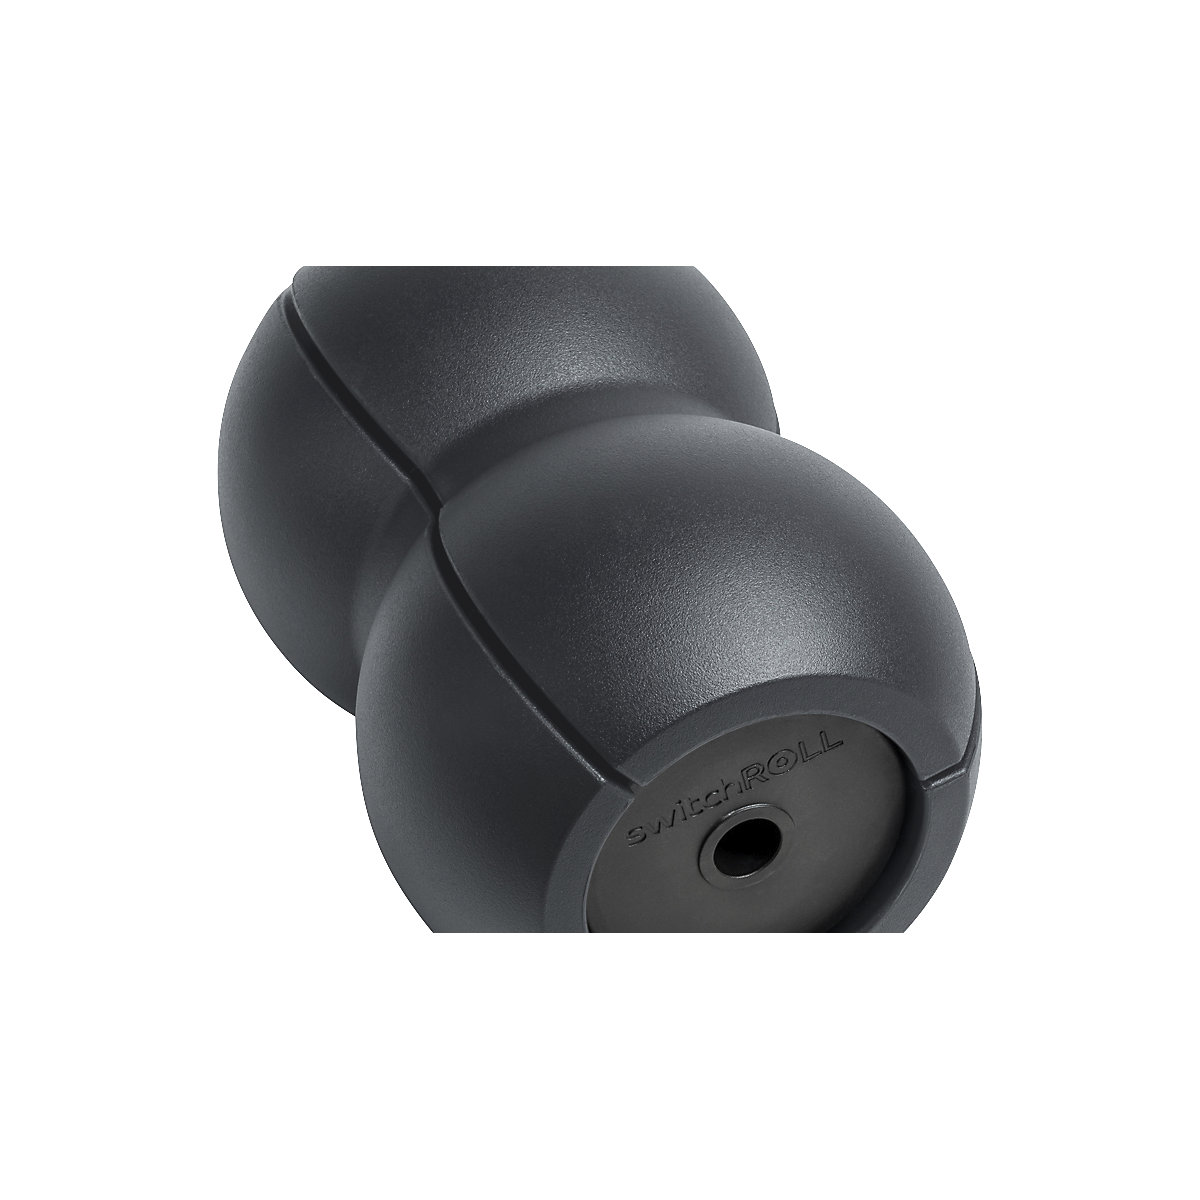 switchROLL, smooth peanut roller – meychair ergonomics